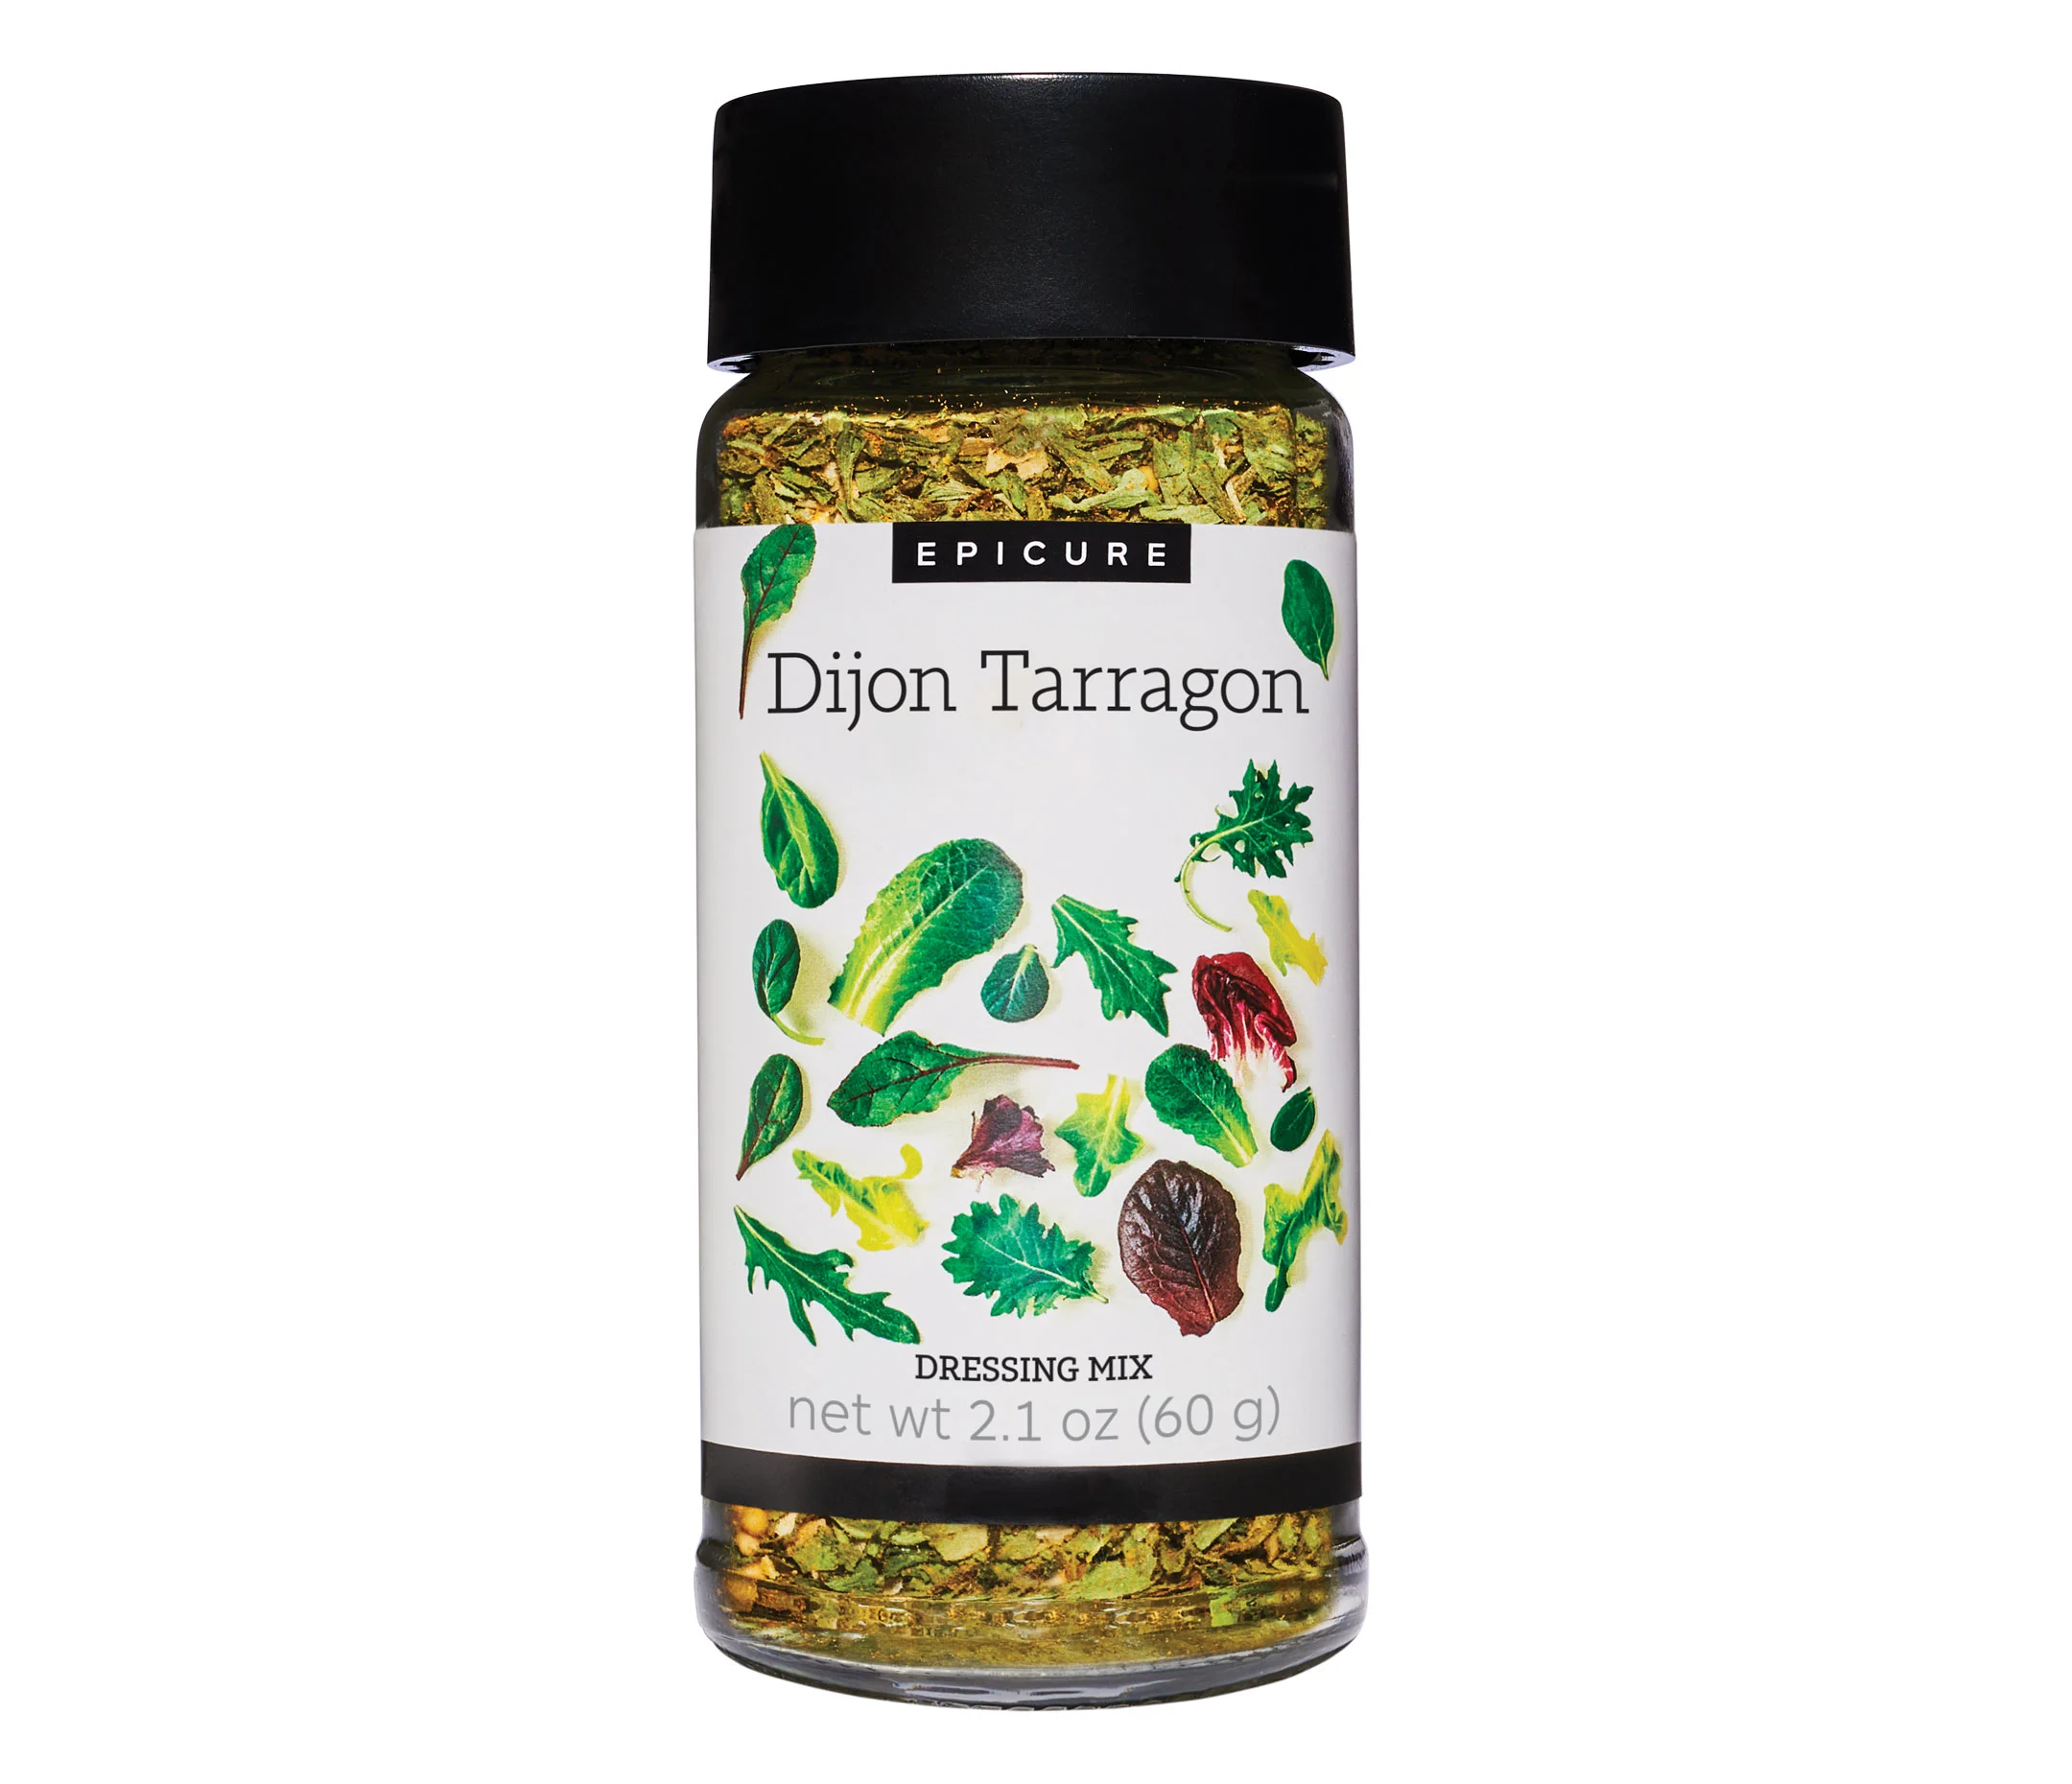 Dijon Tarragon Dressing Mix